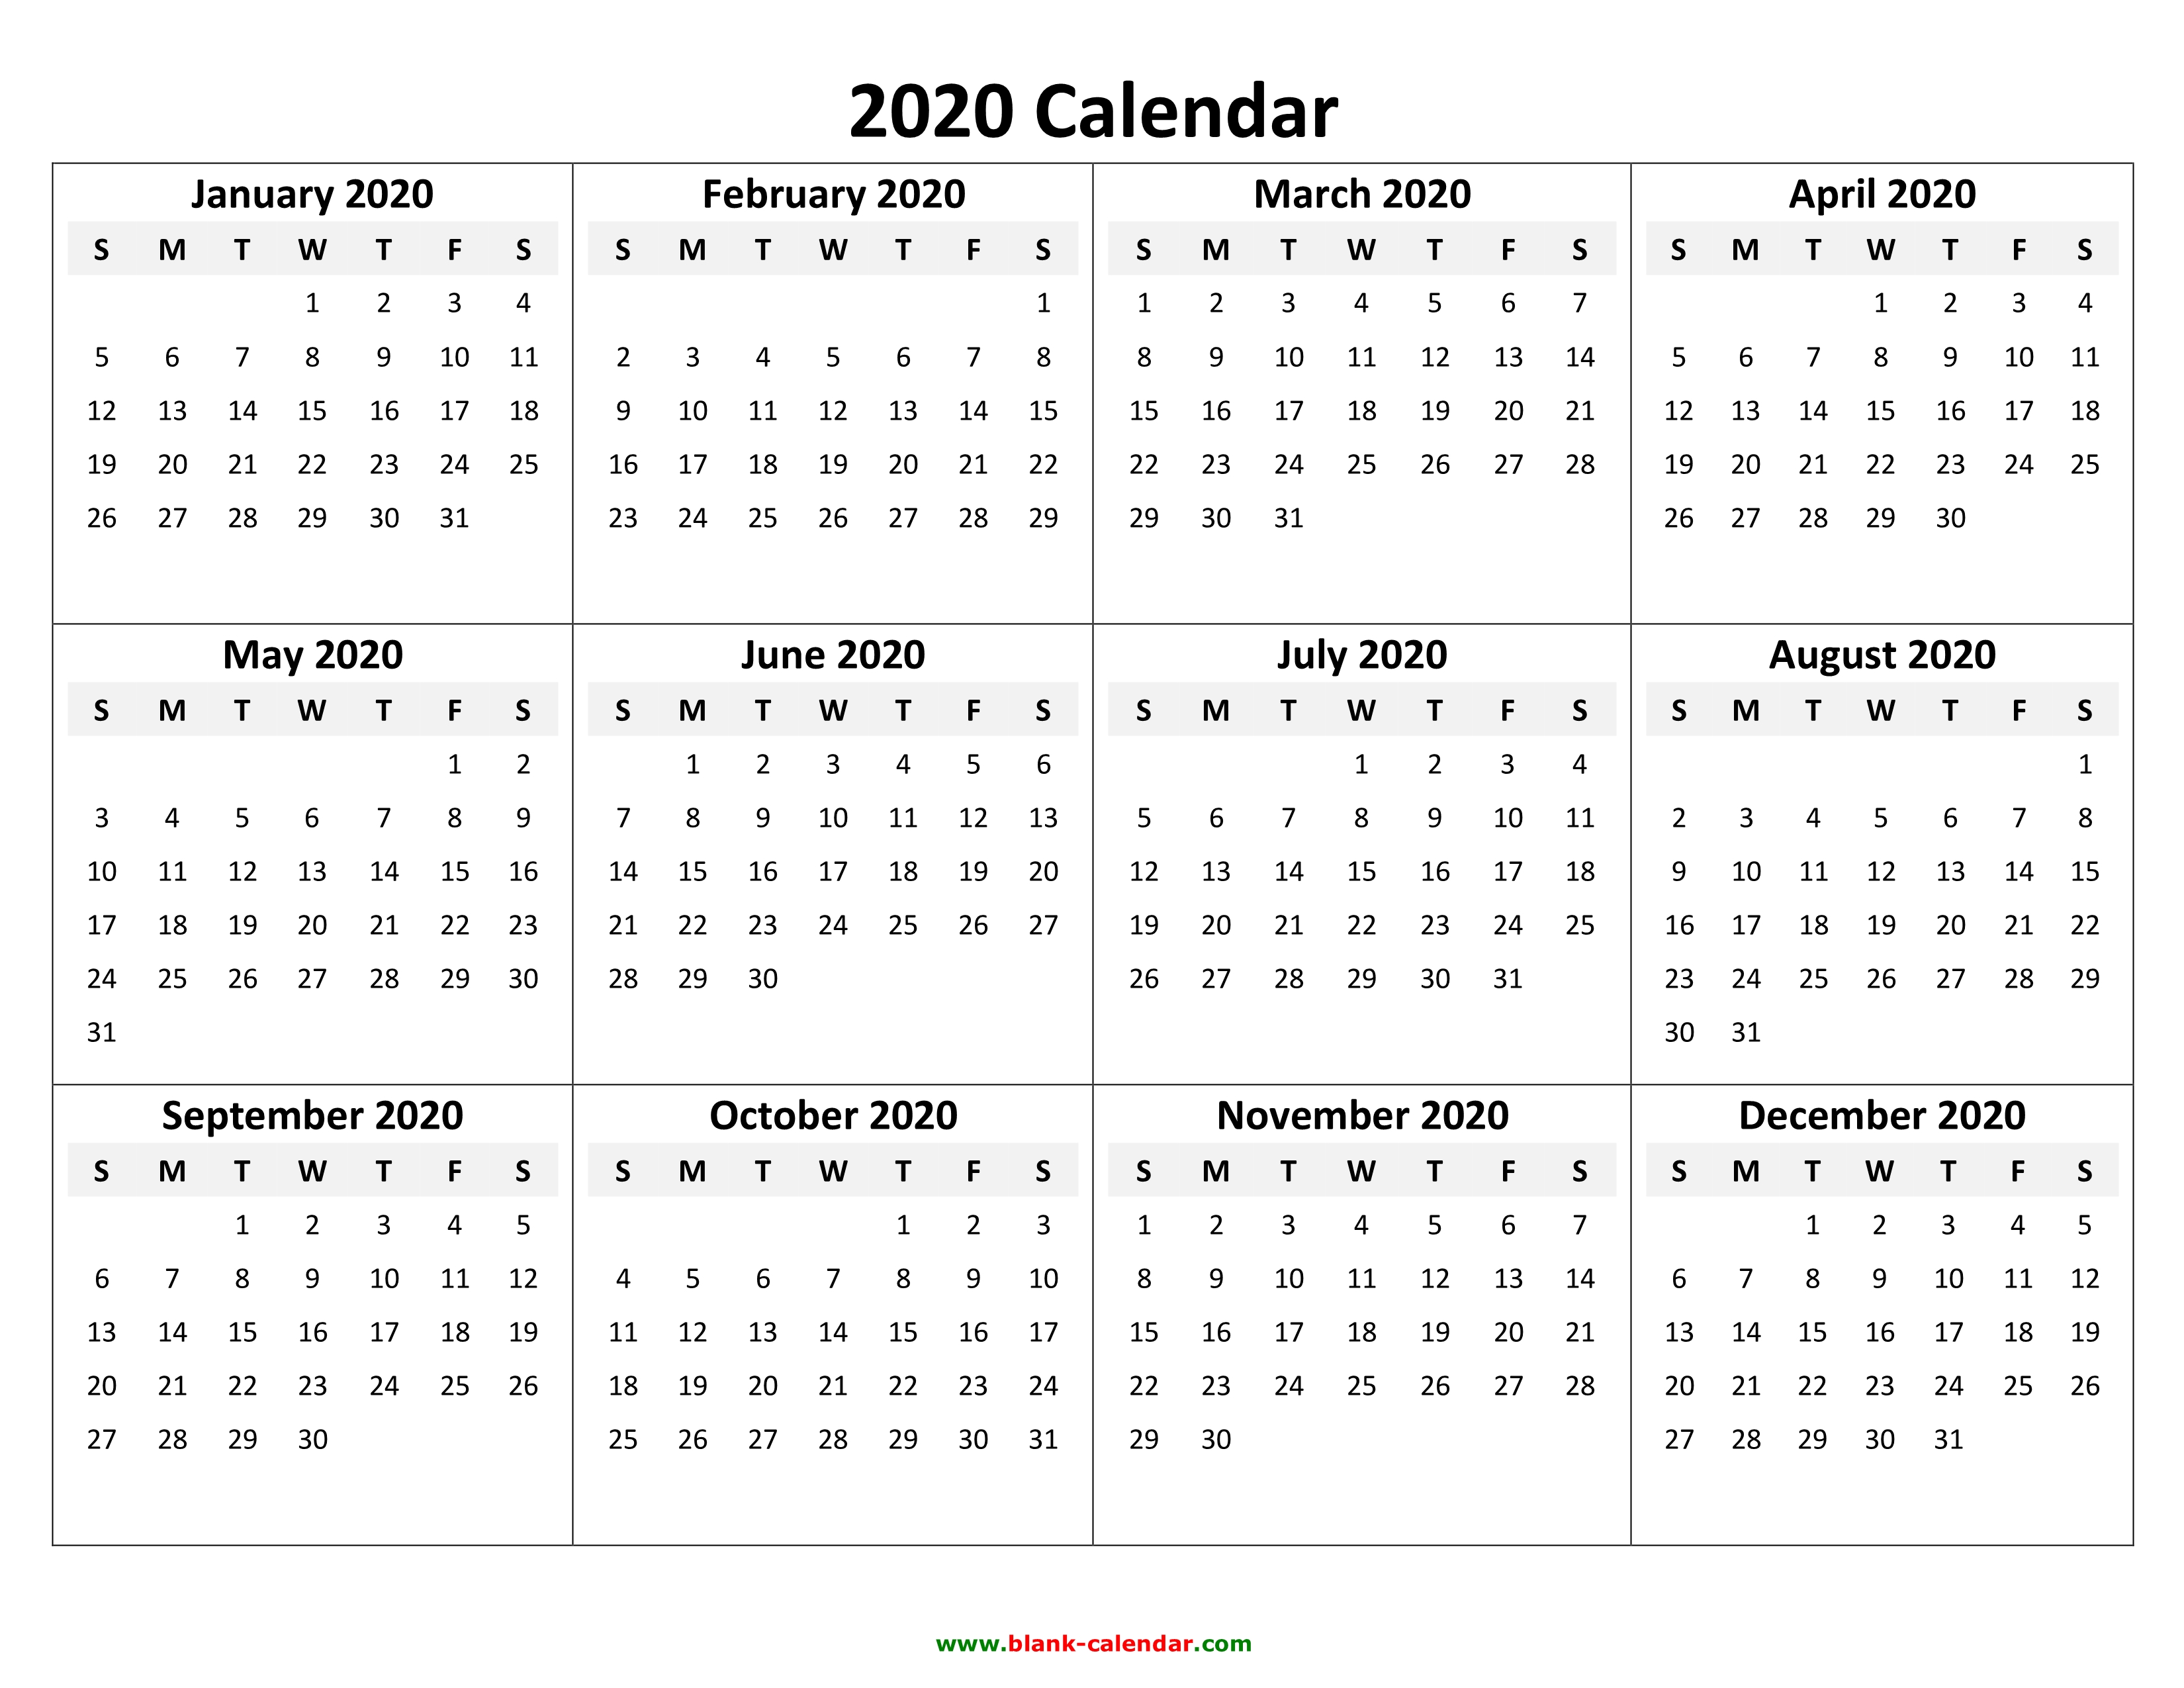 2020 calendar download pdf